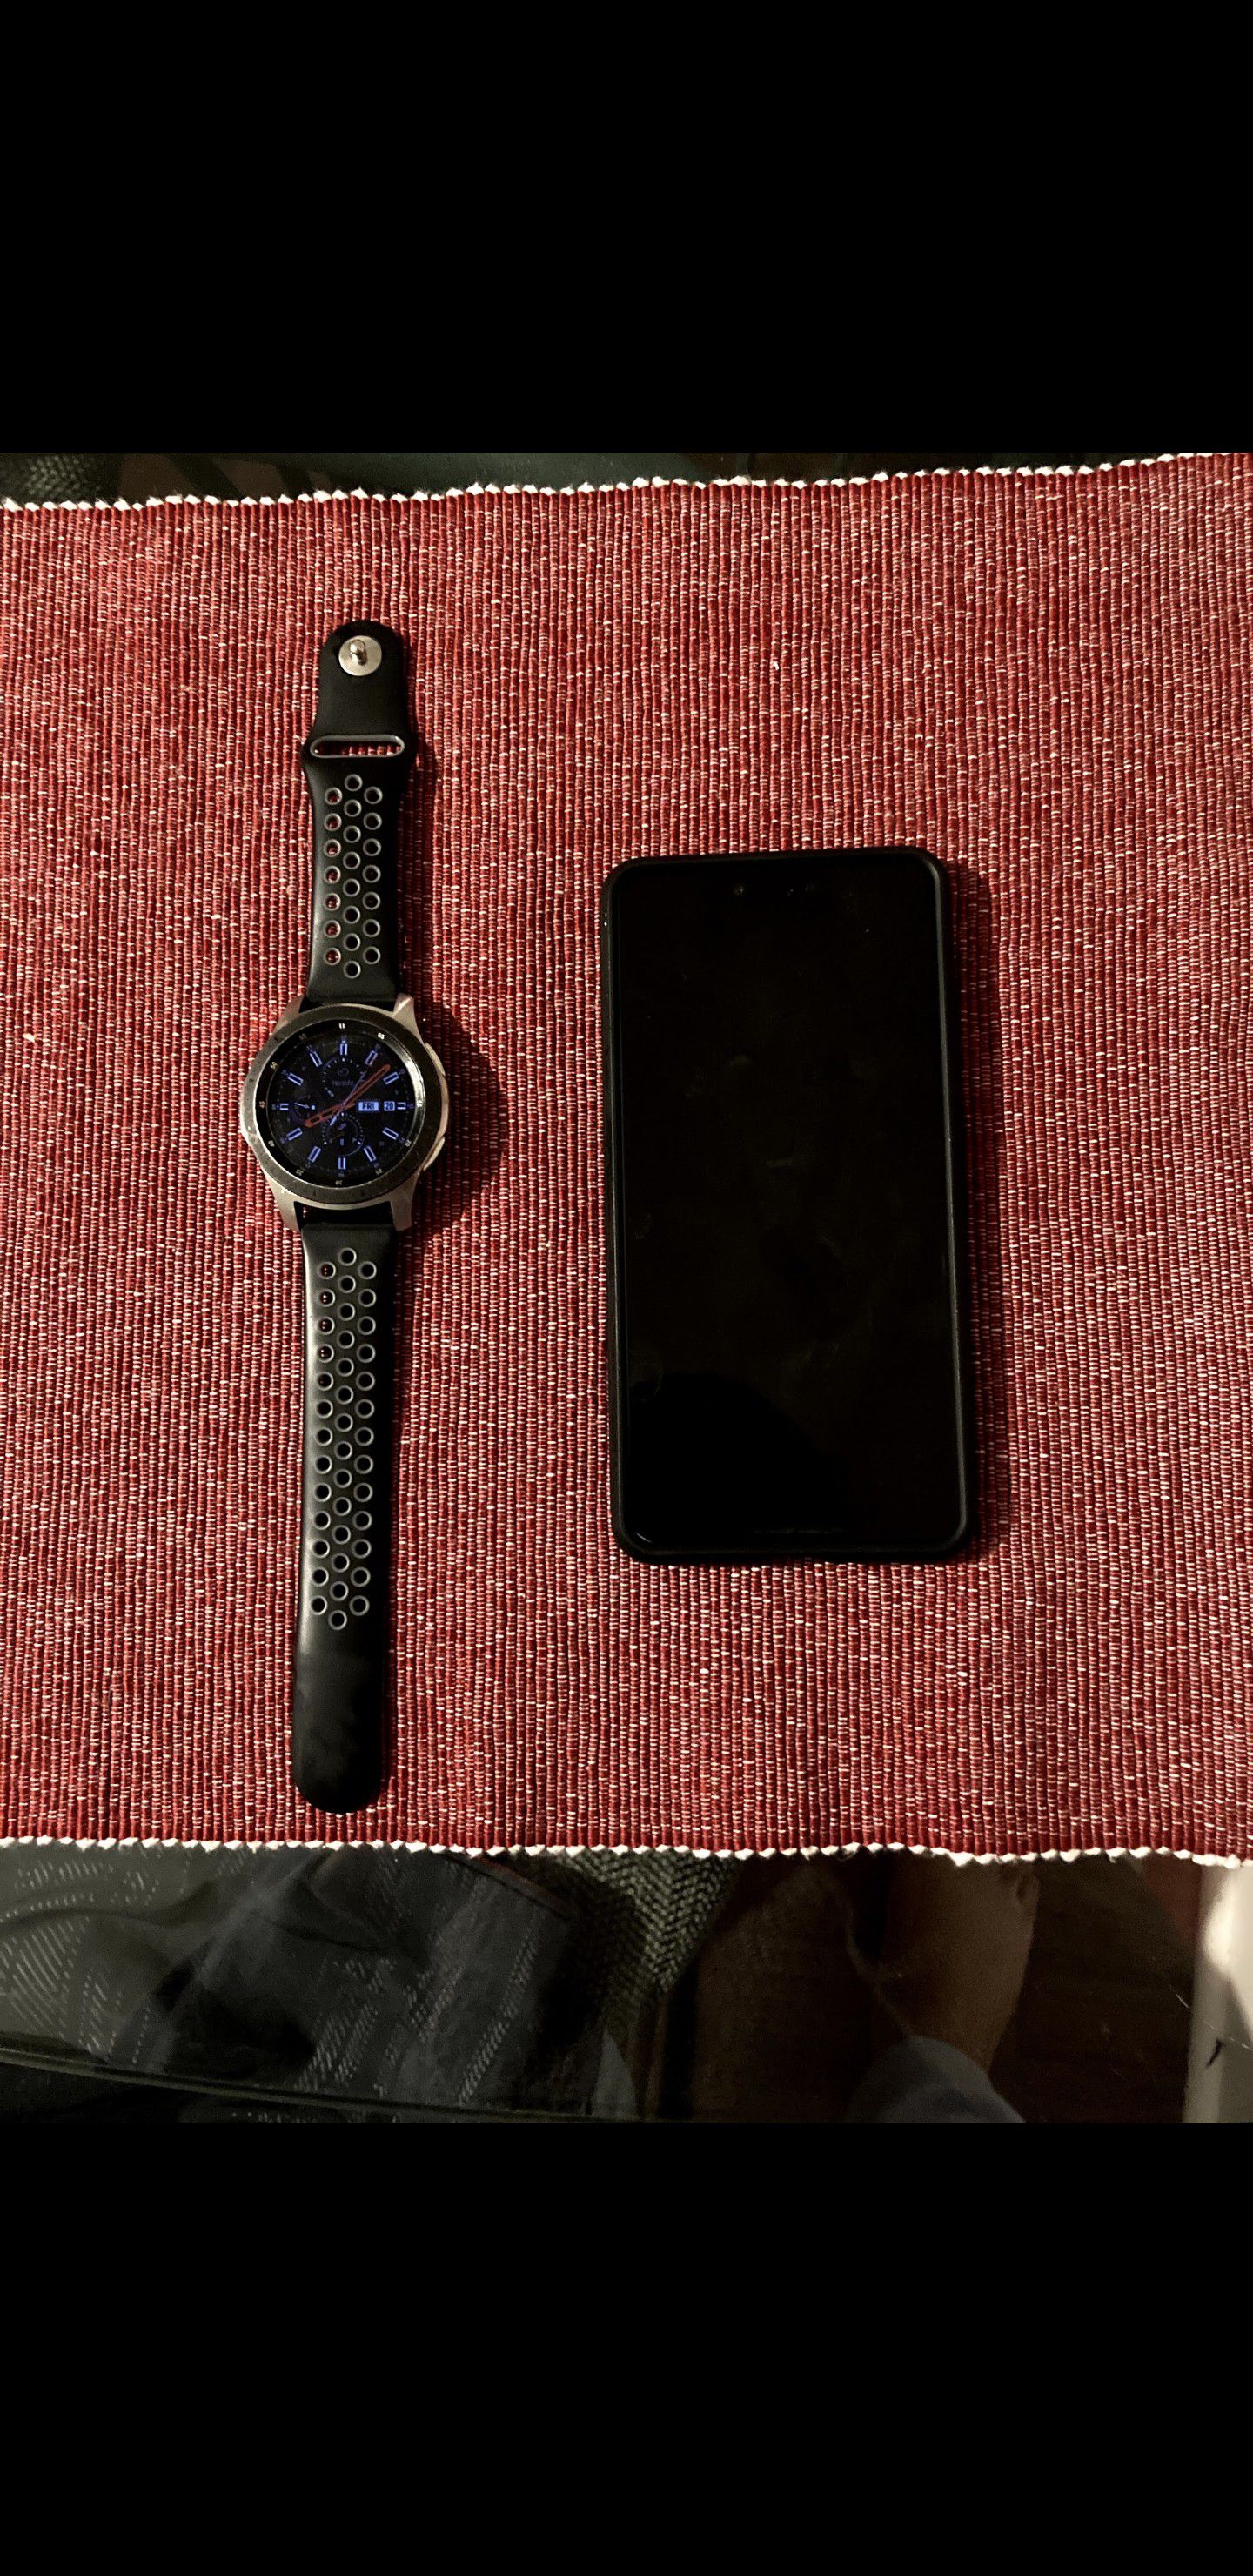 Google pixel 3 XL and Samsung Galaxy watch Bundle